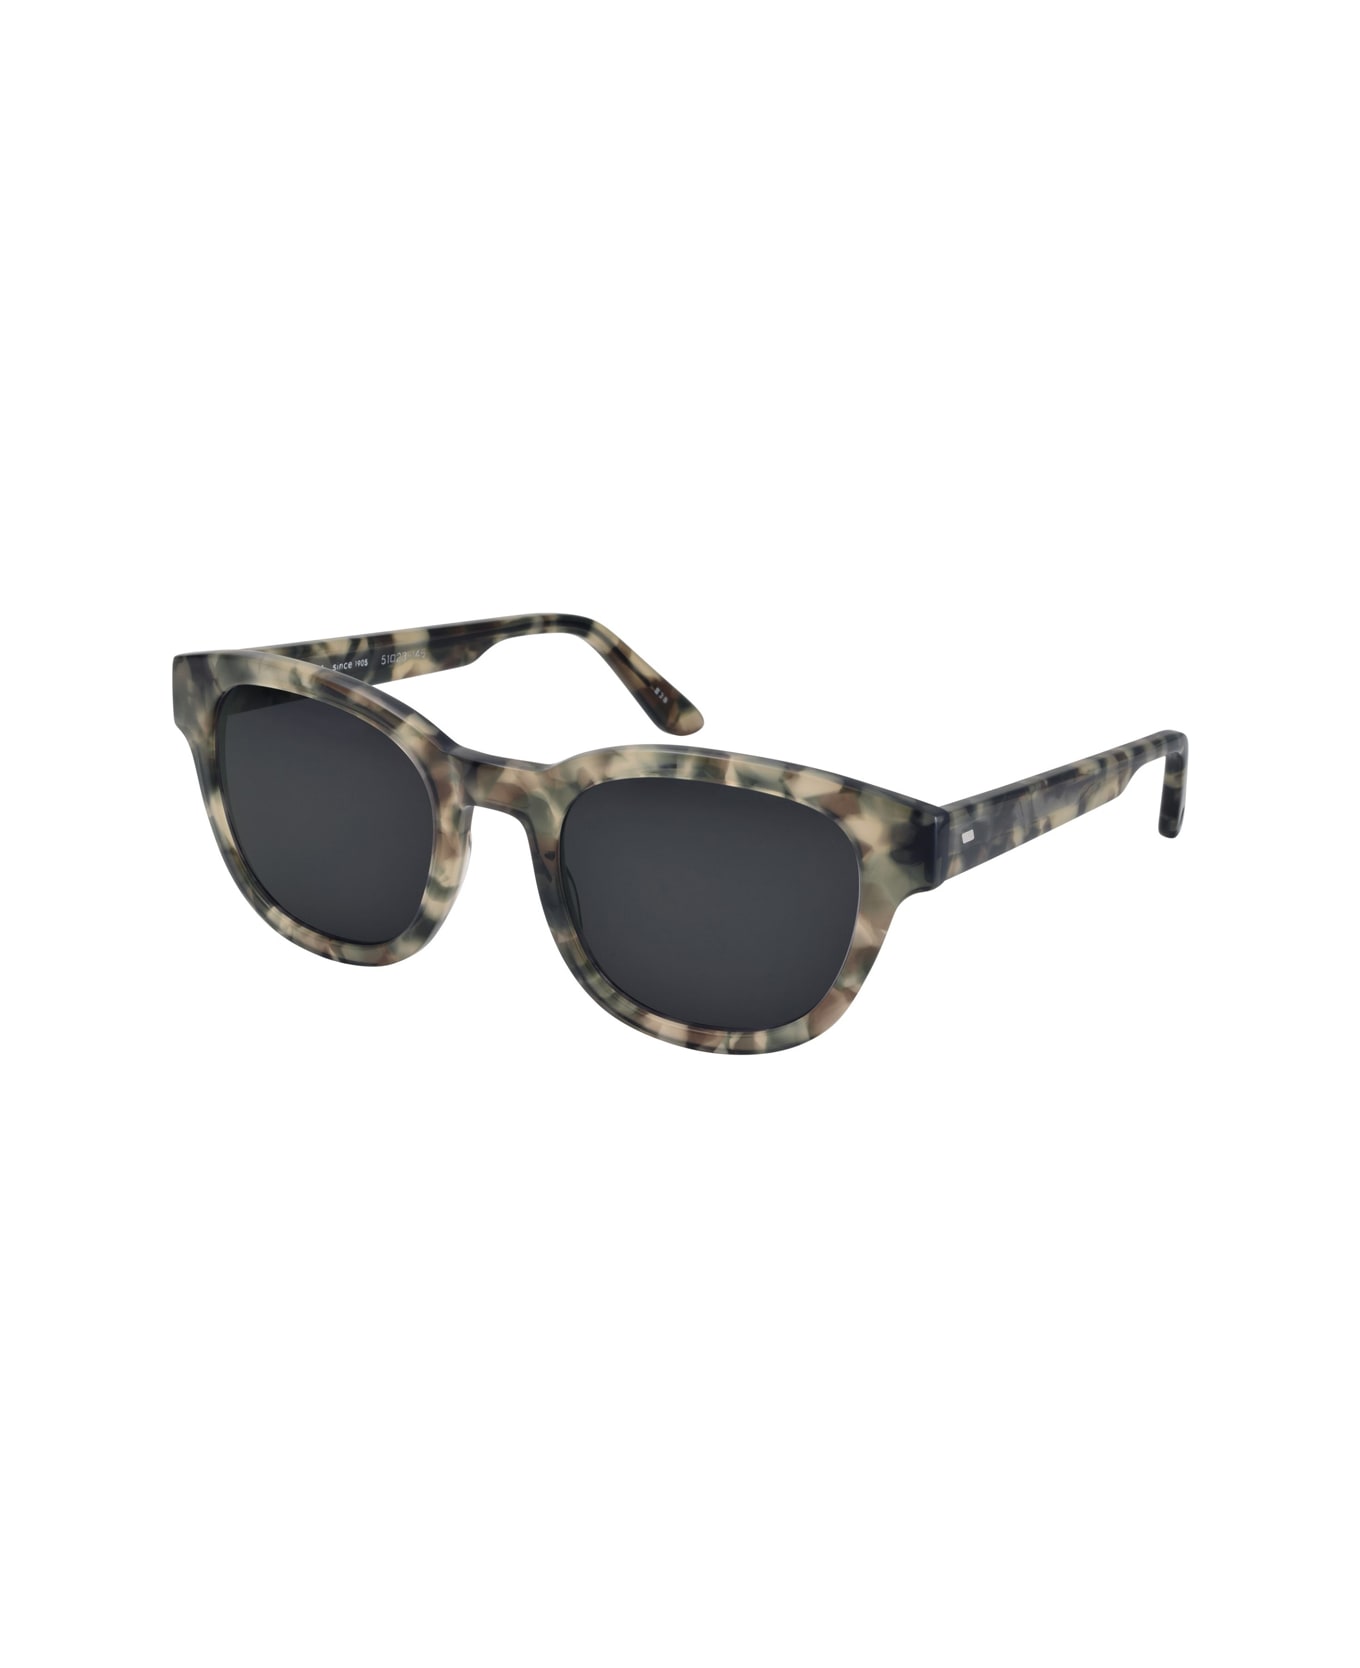 Masunaga Kk 096 S38 Sunglasses - Verde サングラス